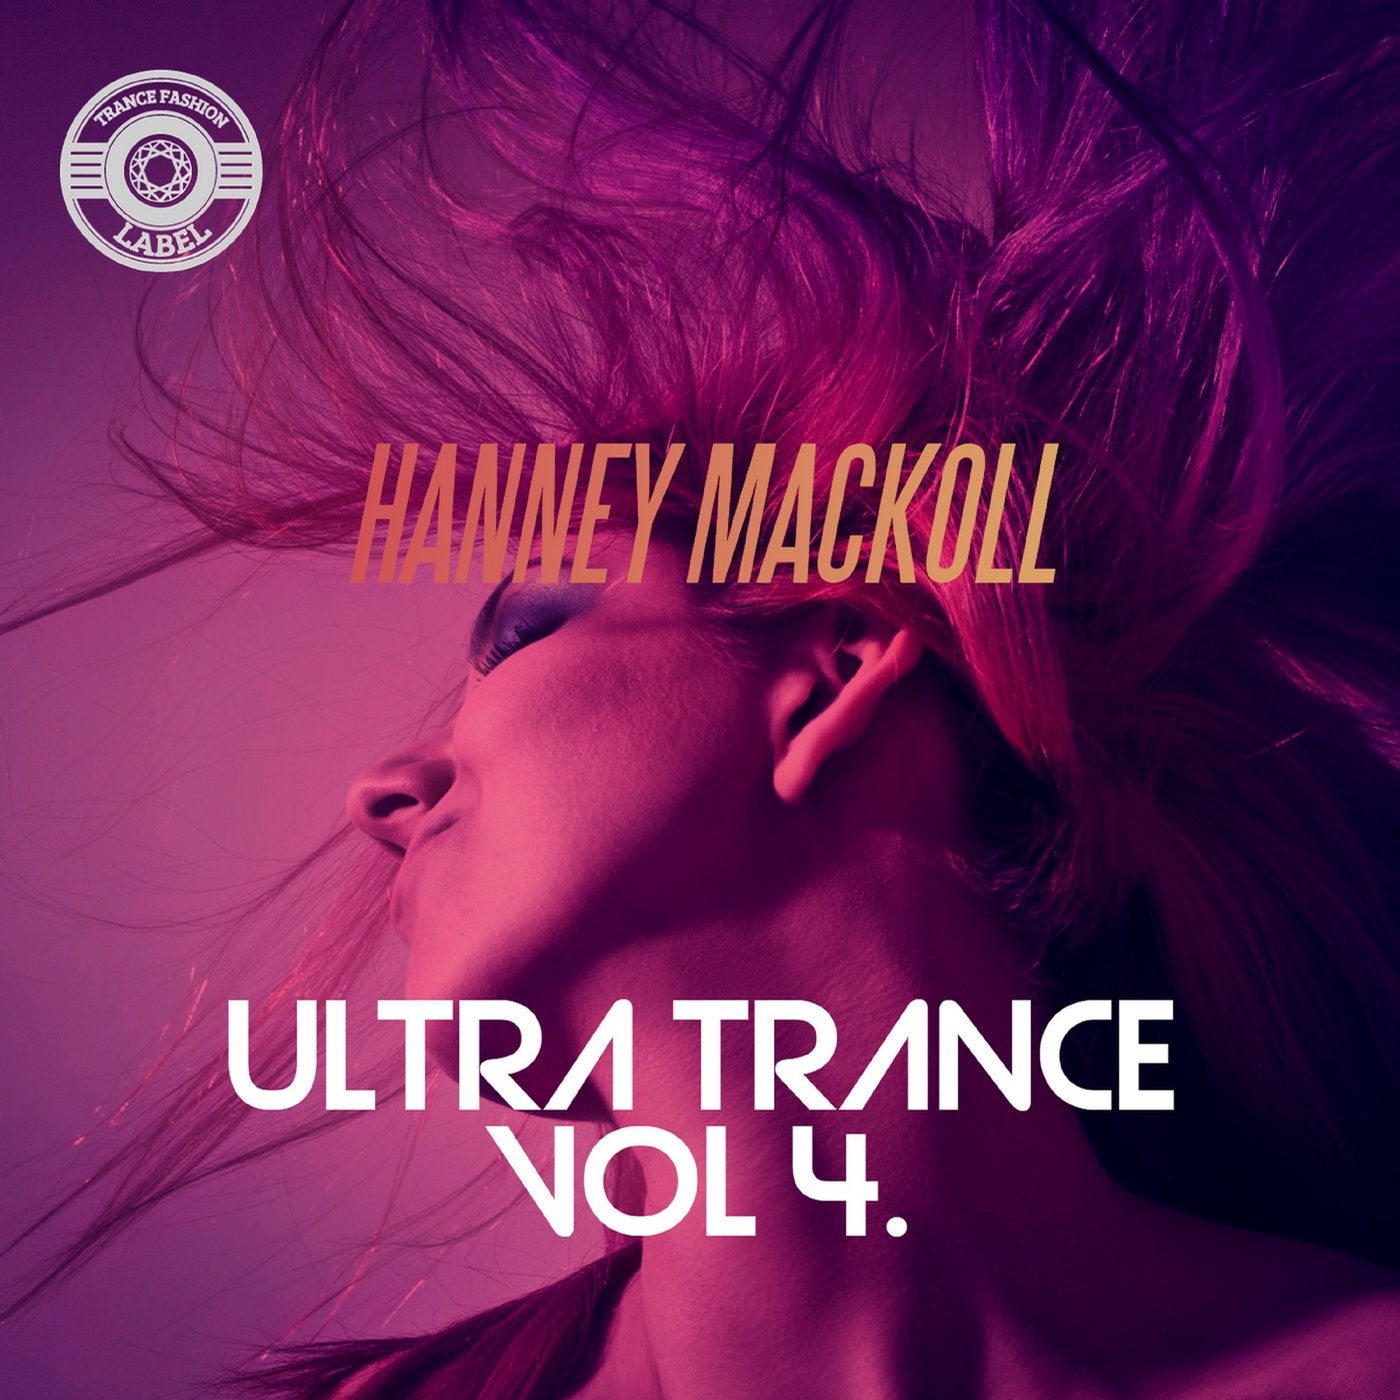 Ultra Trance (Vol. 4)